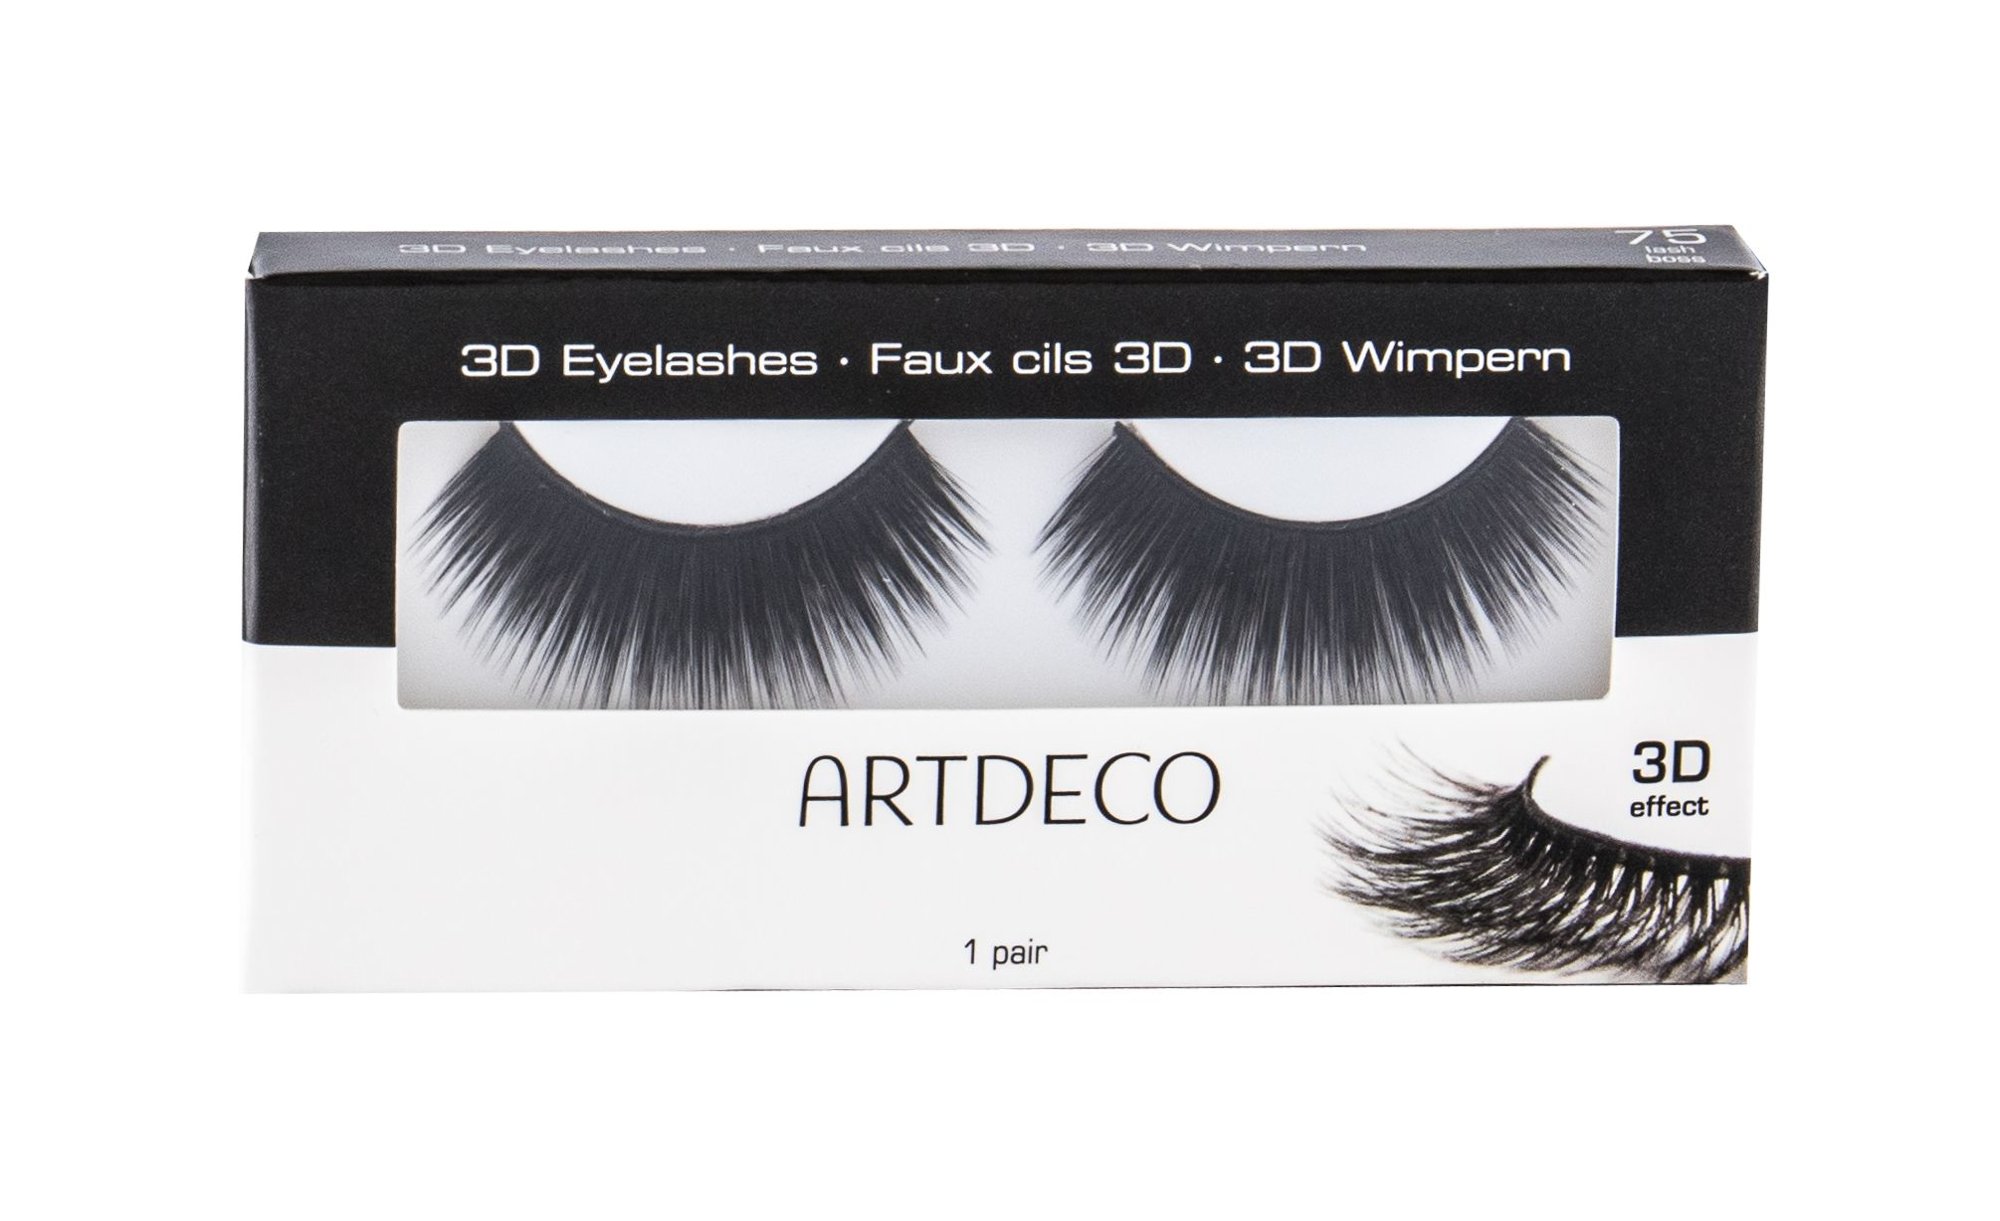 Artdeco 3D Eyelashes